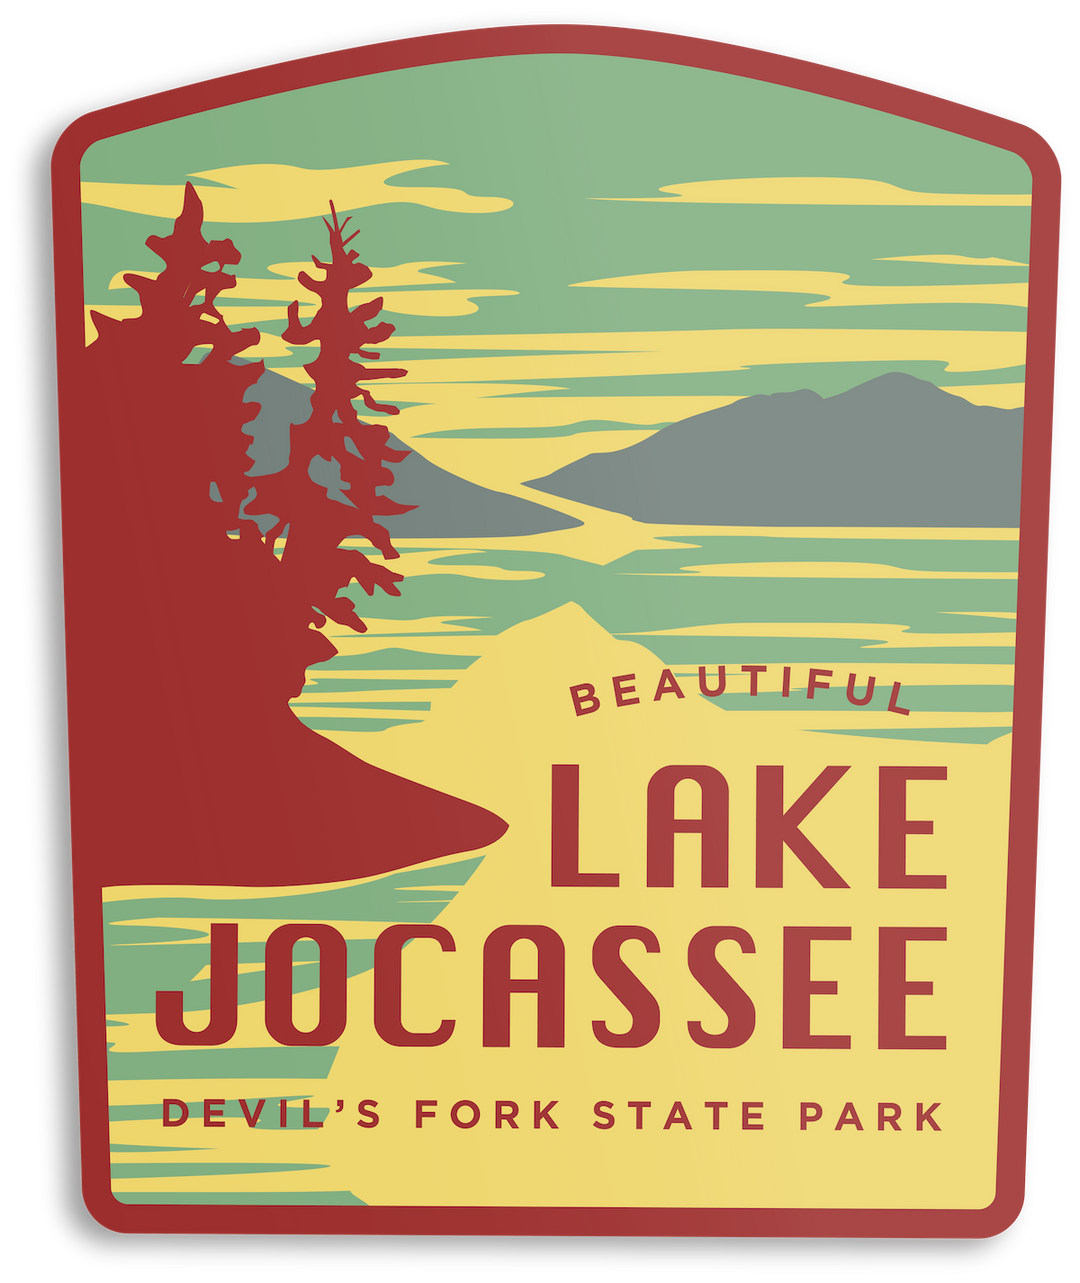 Lake Jocassee Sticker Sticker One Size 